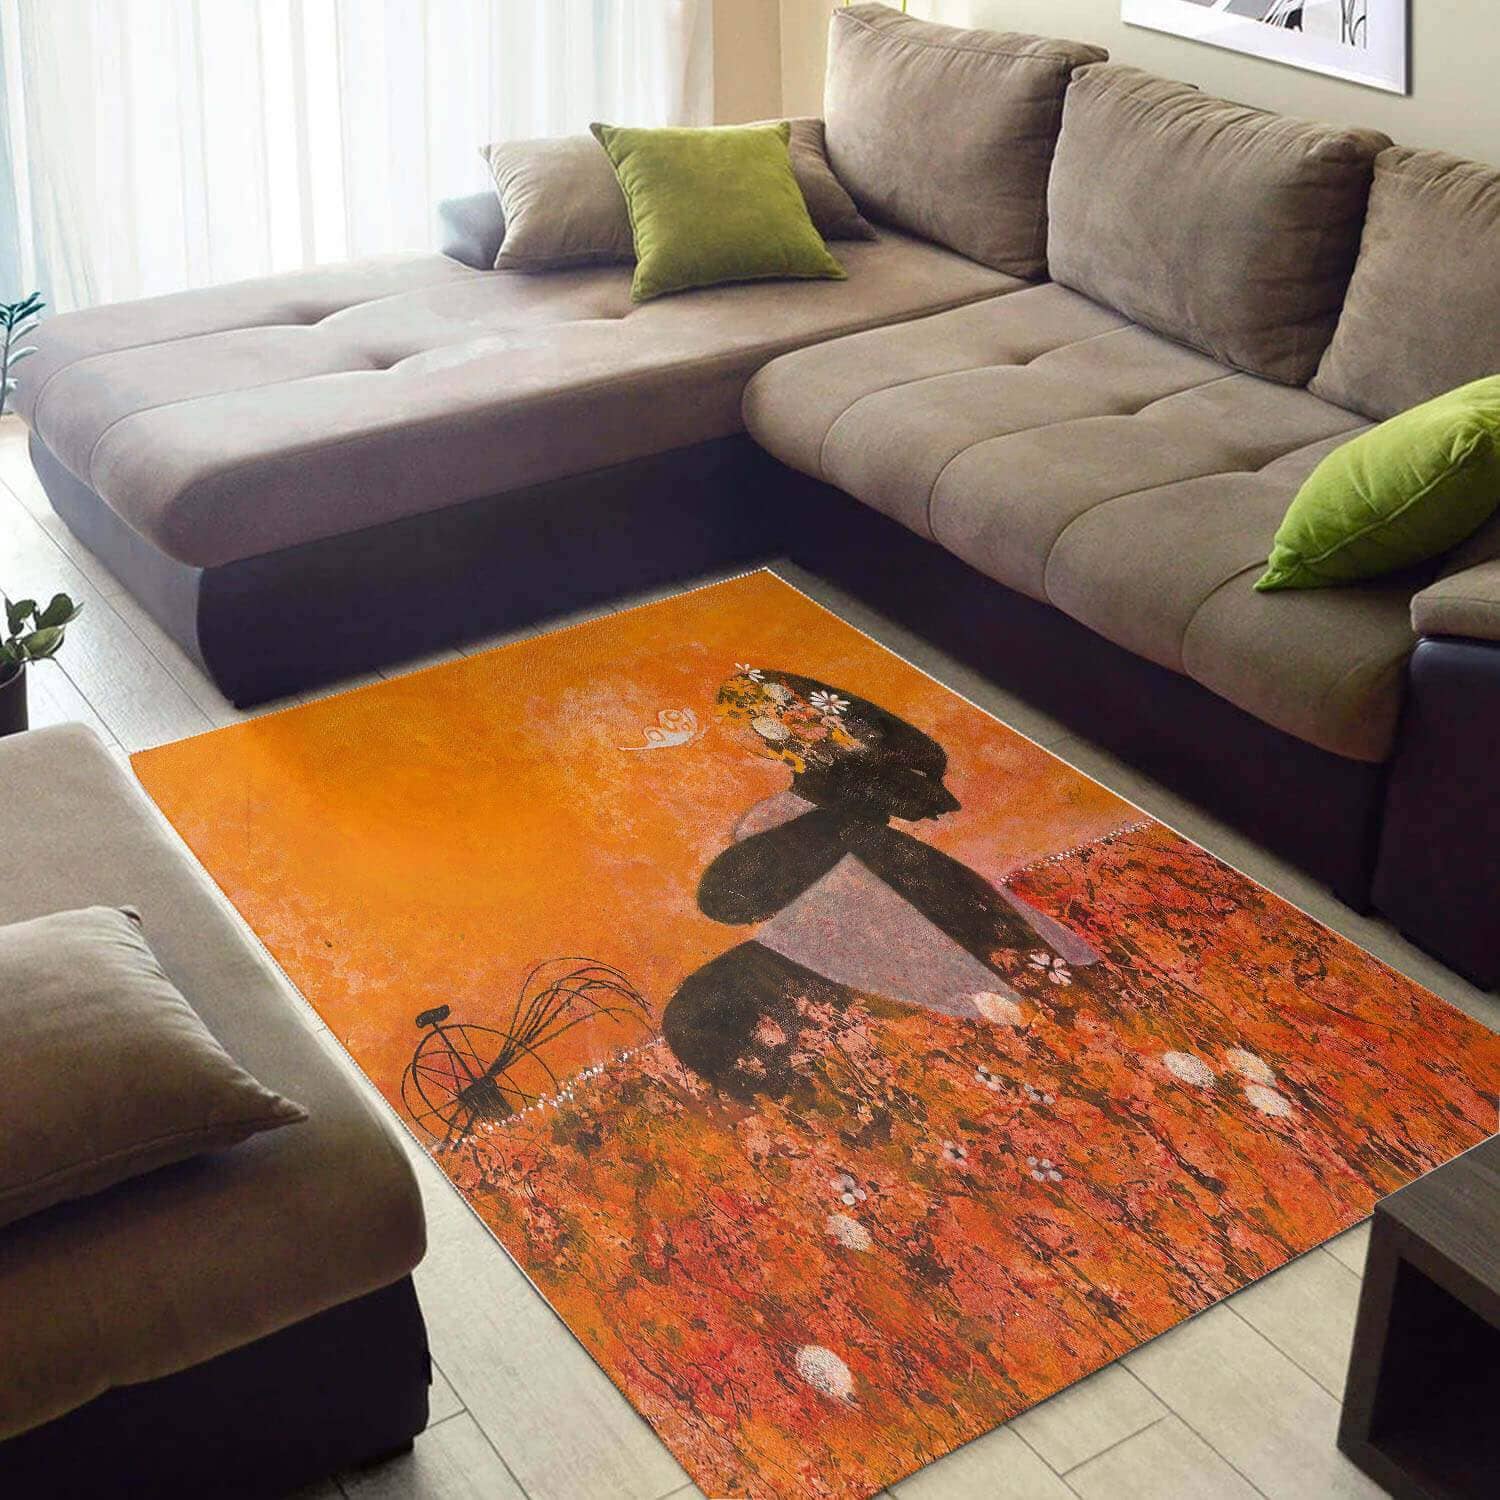 Trendy African Beautiful Afro American Melanin Girl Design Floor Carpet Inspired Living Room Rug